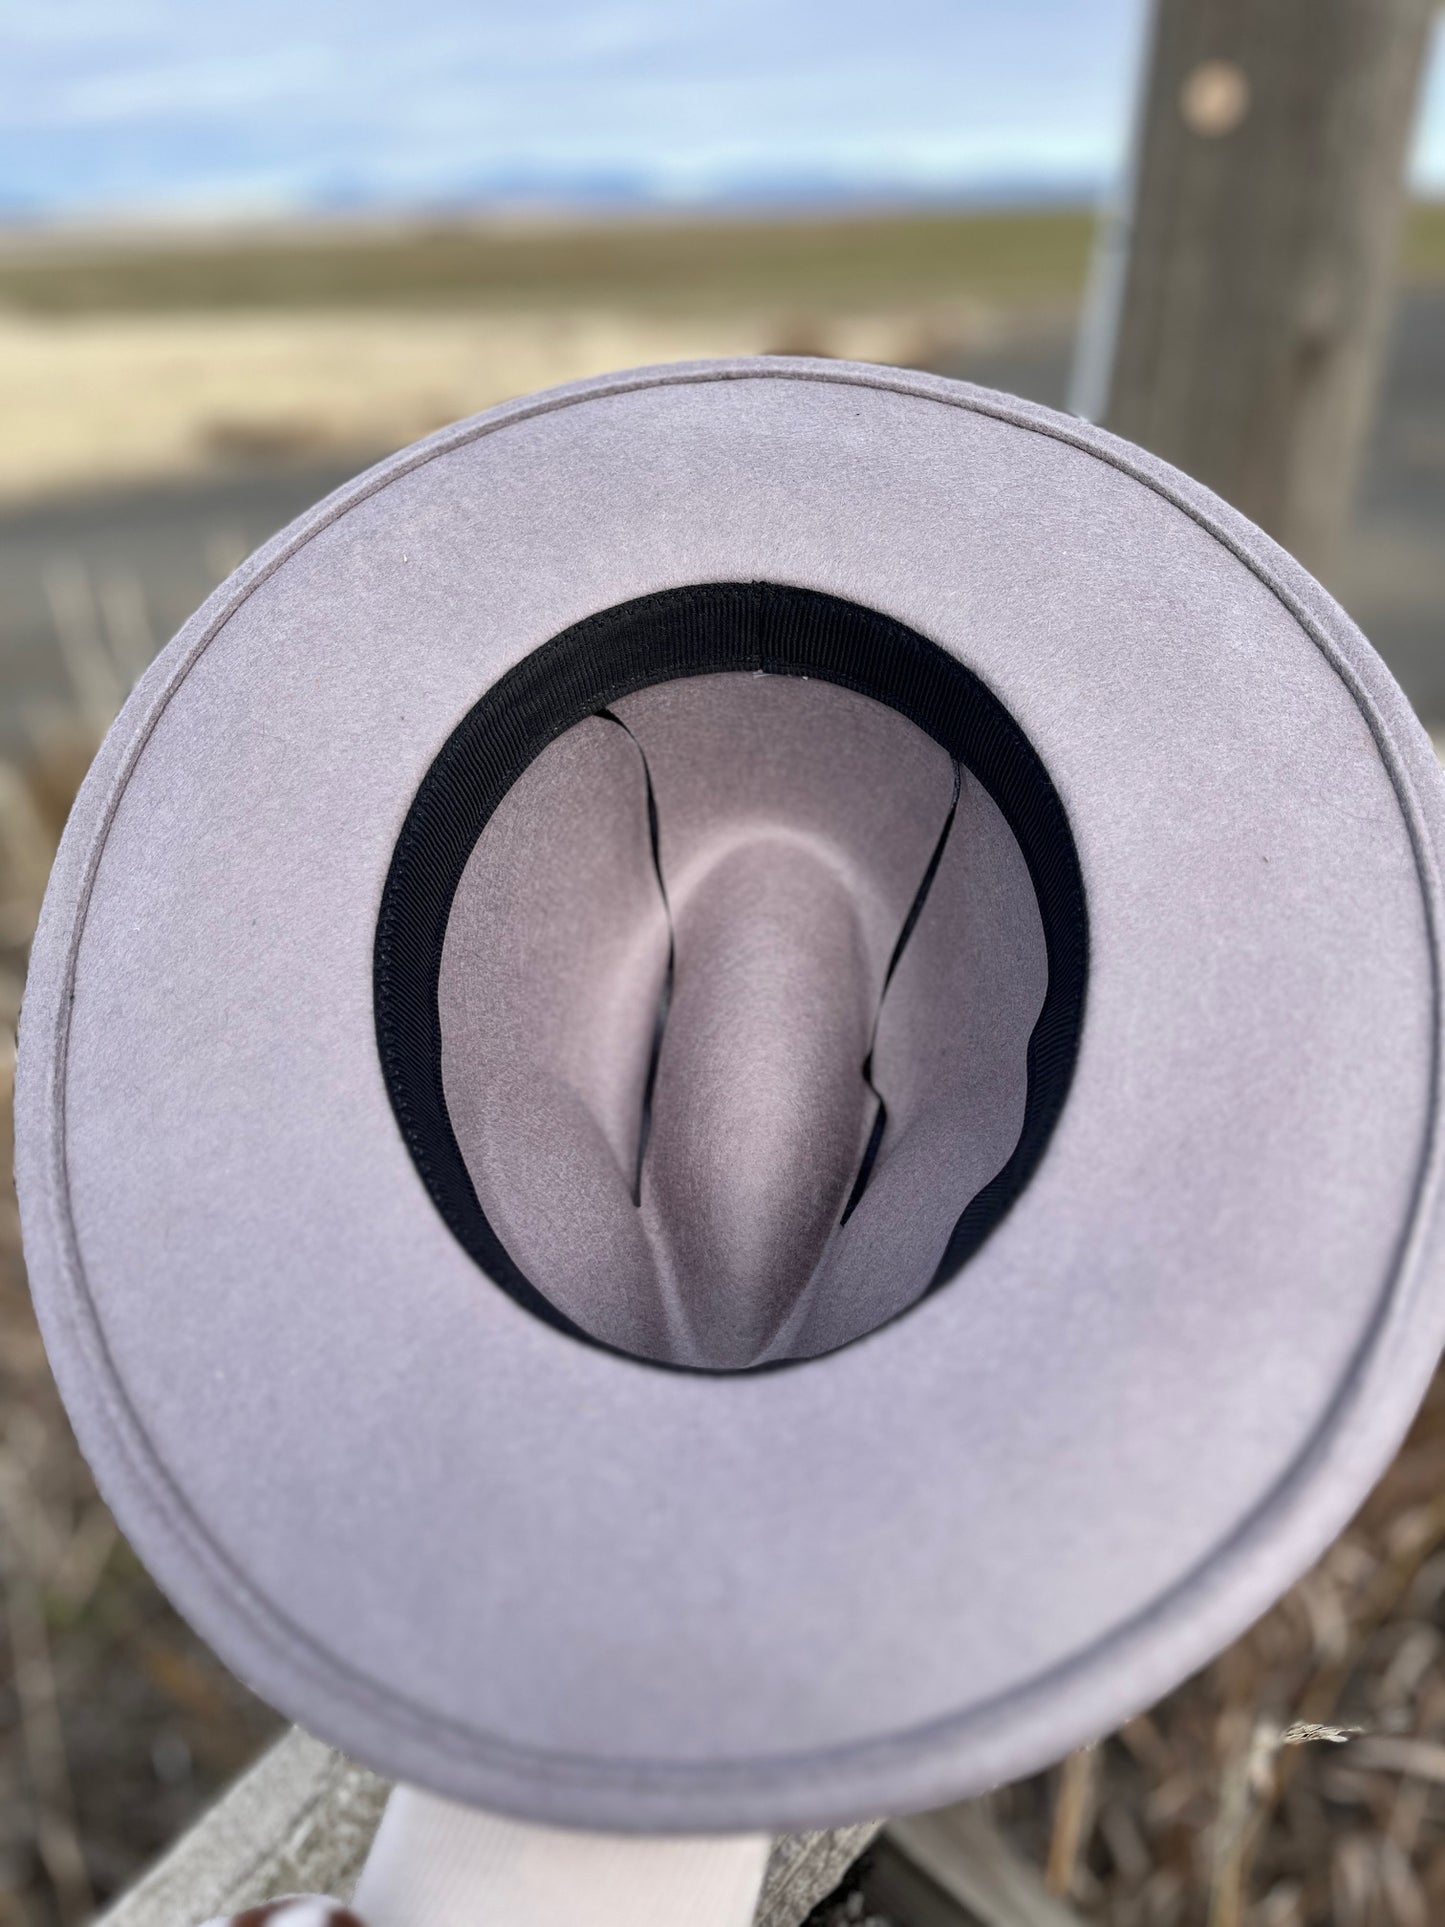 Gray Hat w/ Reversible Wool Band